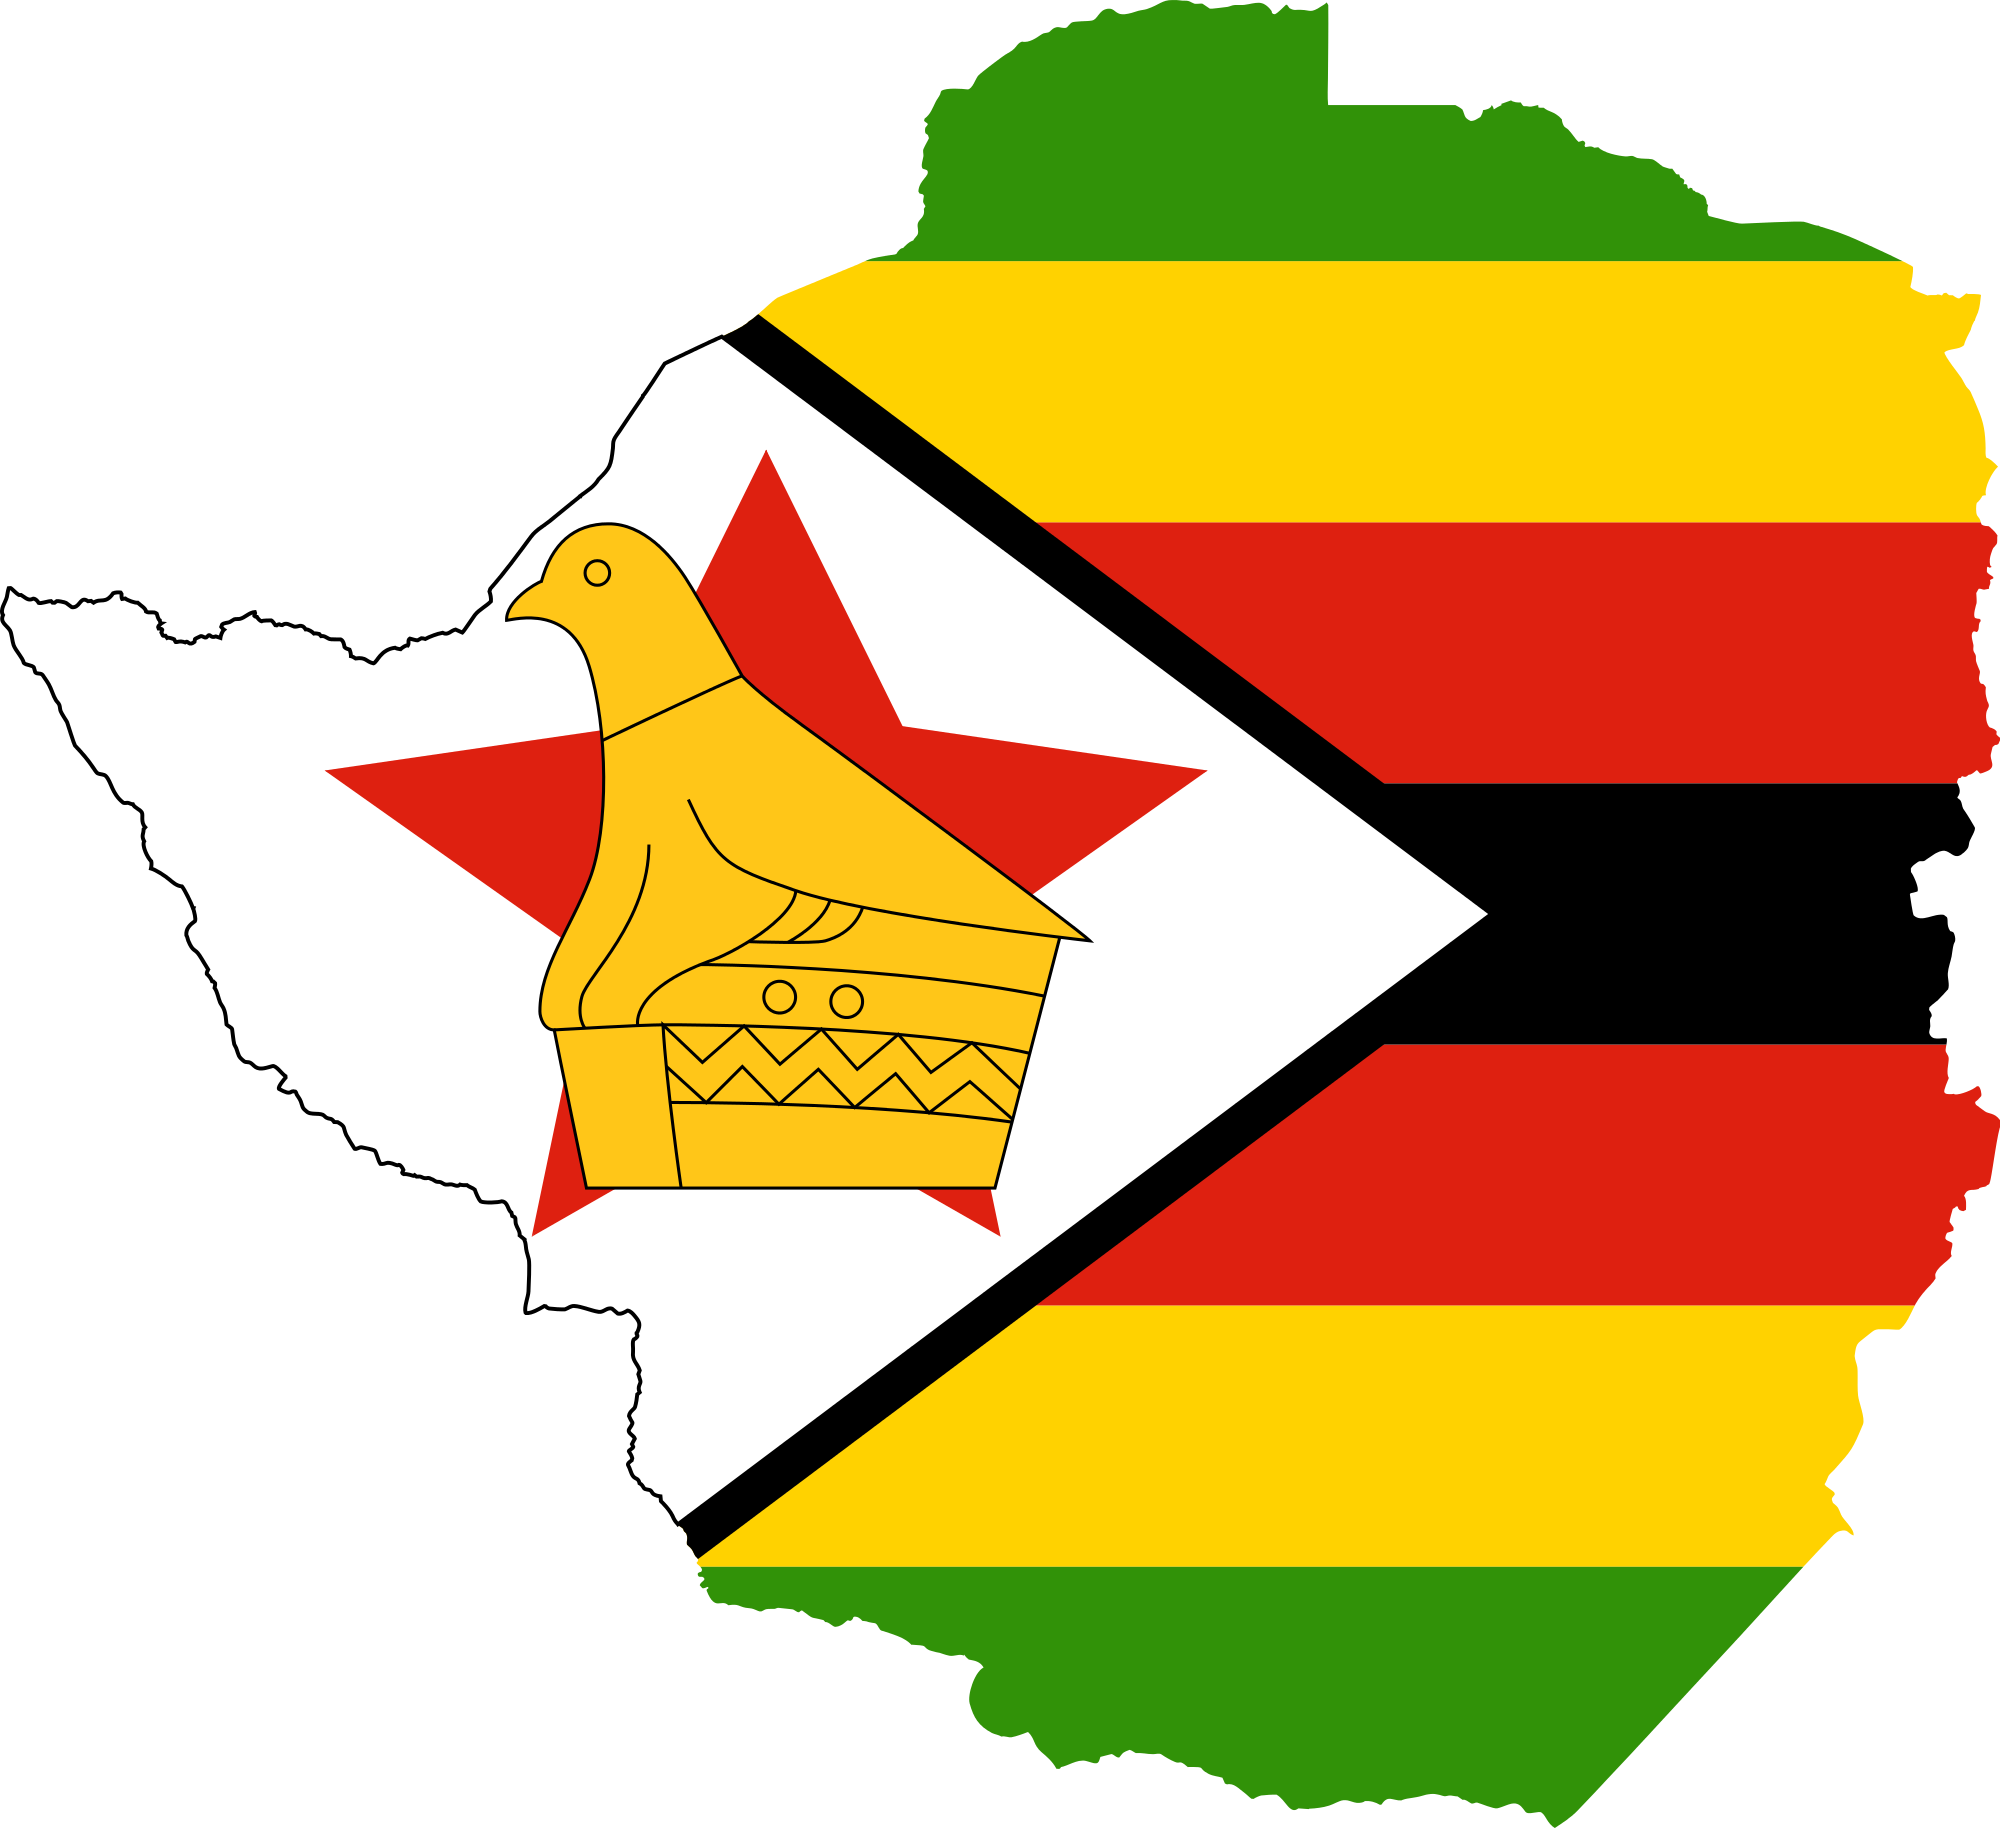 Download flag icon of Zimbabw